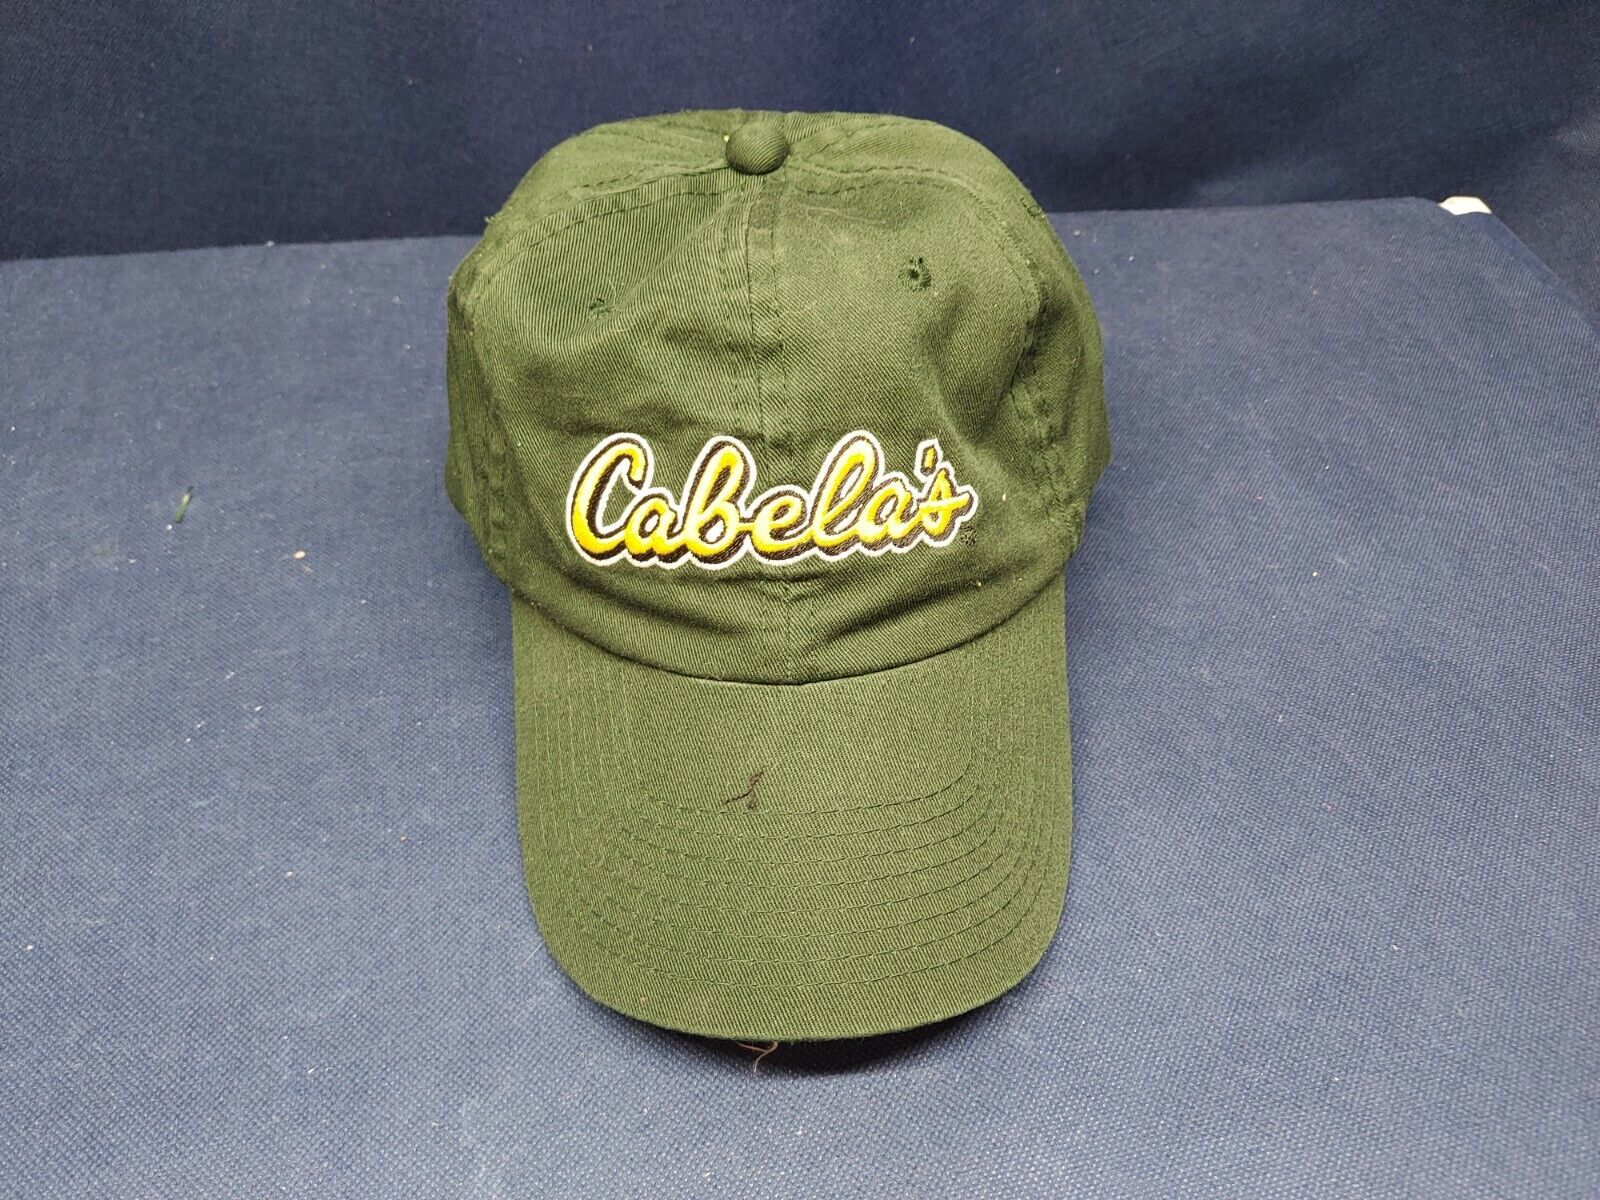  Cabelas Outdoor Store Green Baseball Cap Hat Hunting/Fishing Store